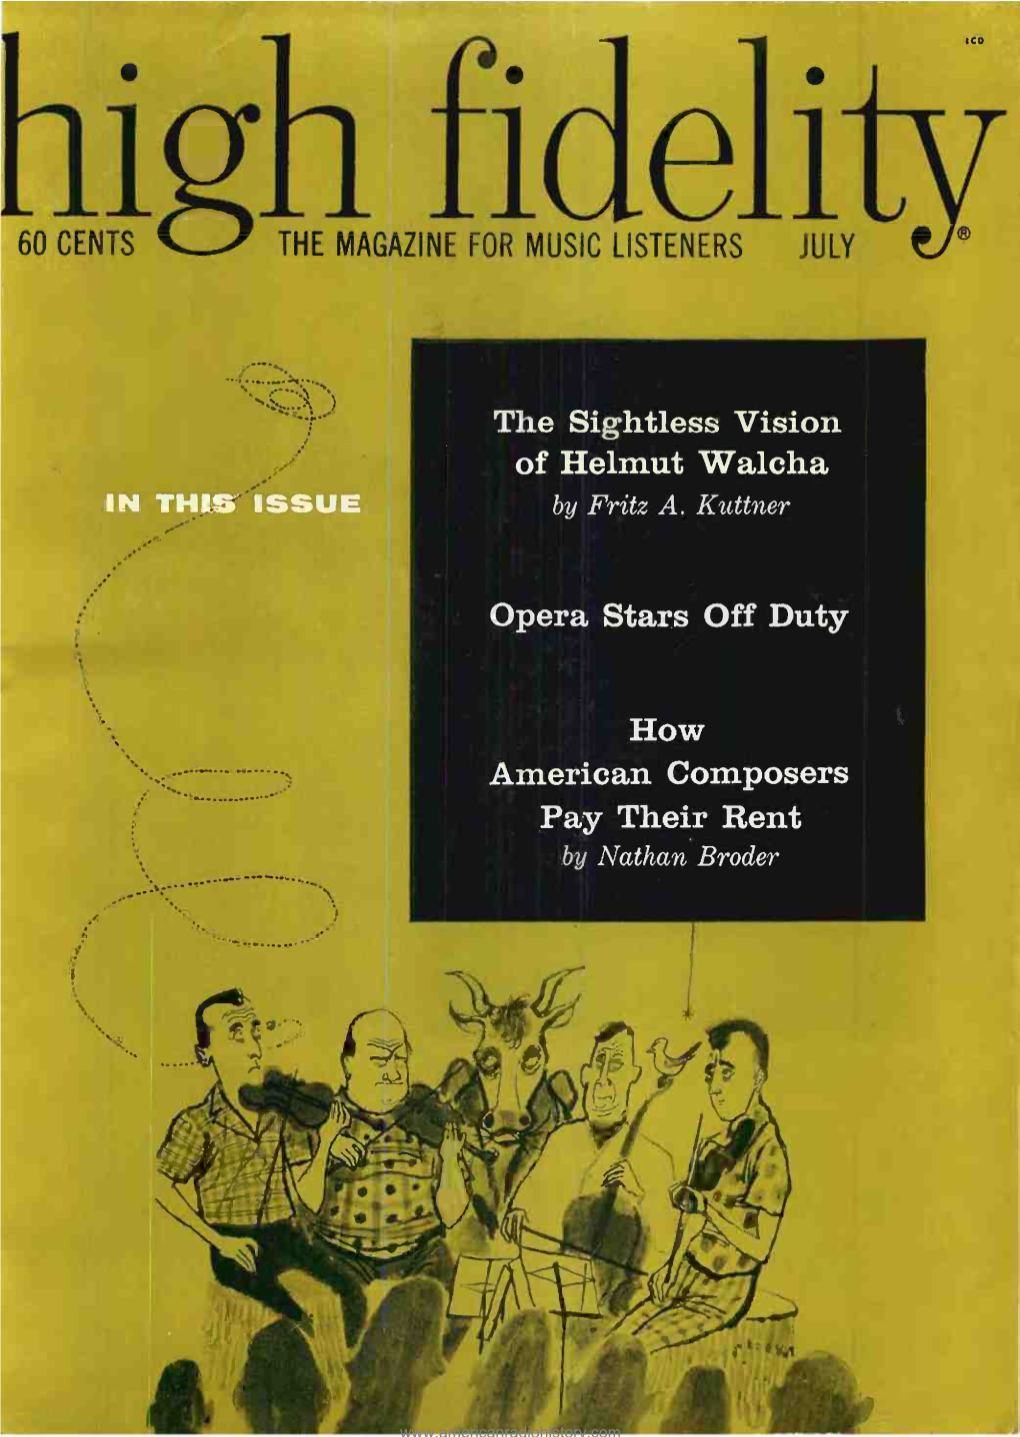 High Fidelity Magazine July 1959